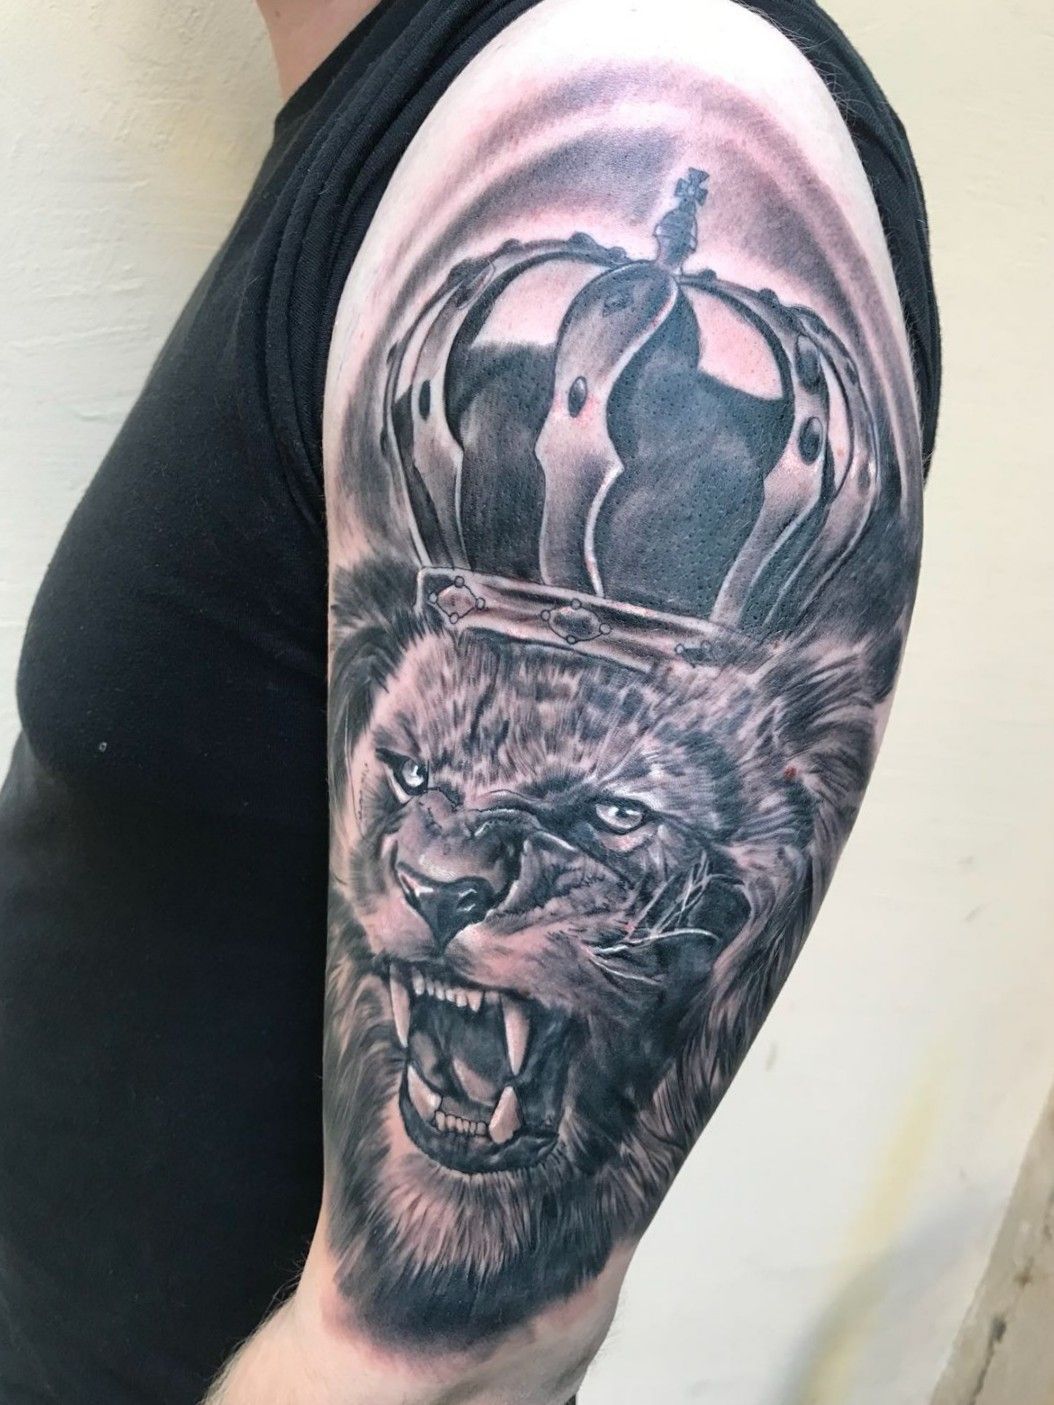 lion roaring tattoo shoulder